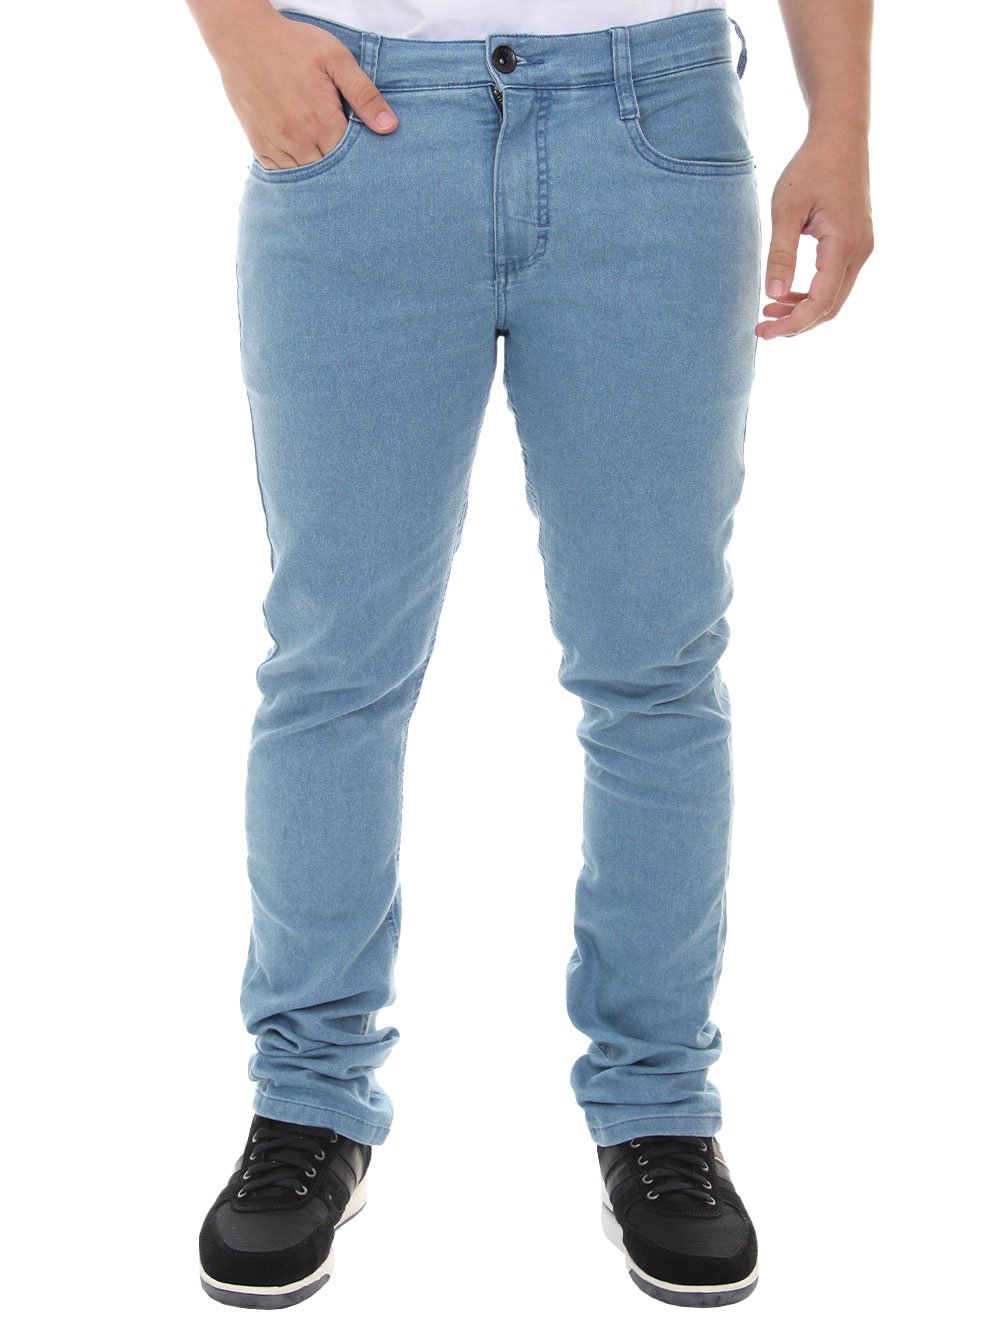 Calça Aramis Jeans Masculina Slim Soft 5 Pockets Azul Claro